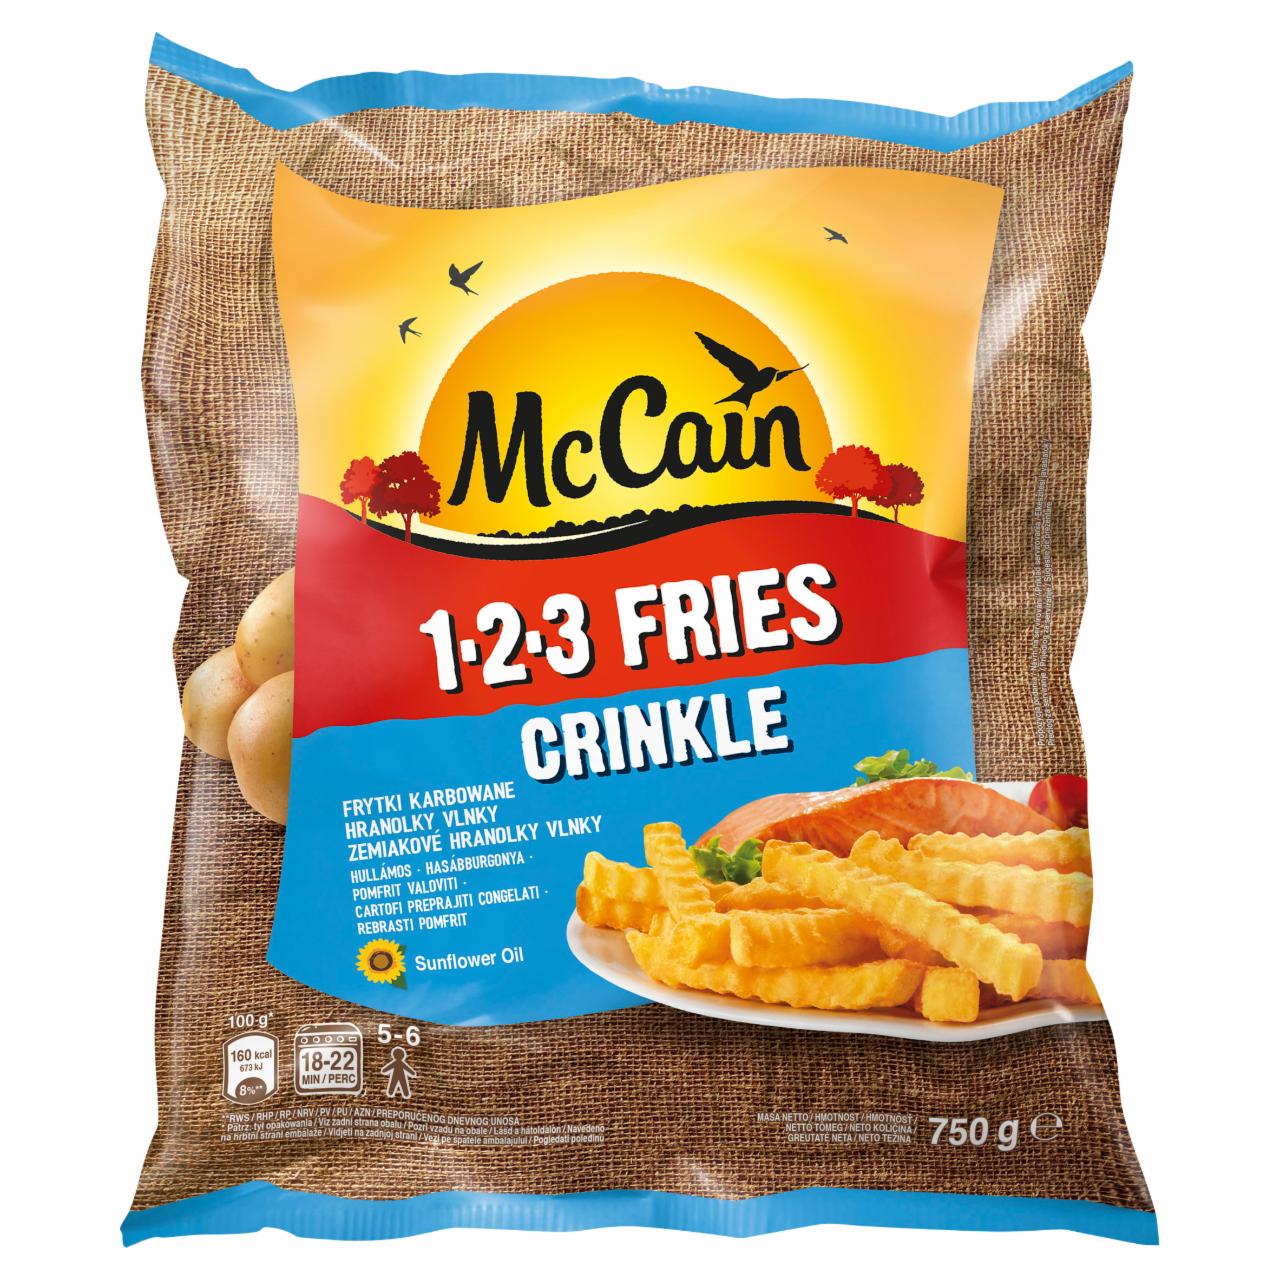 Zdjęcia - McCain 1.2.3 Fries Crinkle Frytki karbowane 750 g